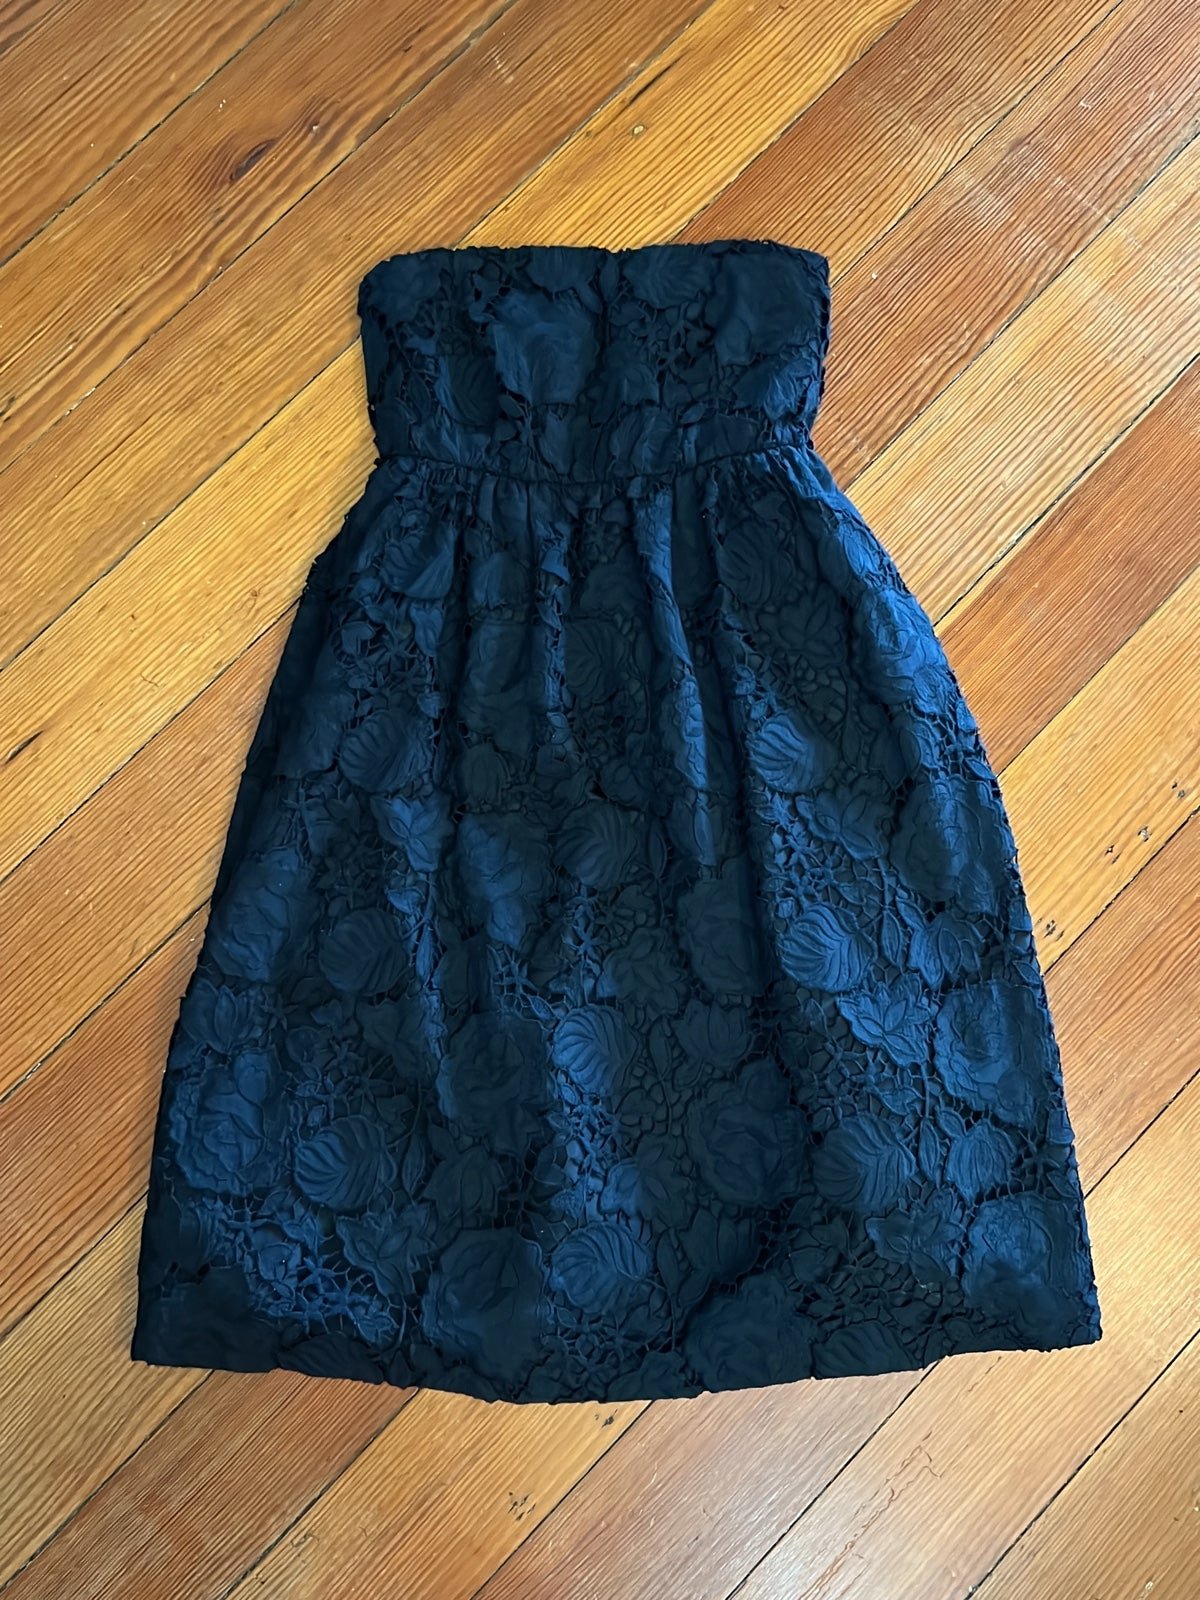 Comfortable J. Crew Black Lace Sleeveless Cocktail Dress Size 6/S NWOT KS4sxuP6g Store Online